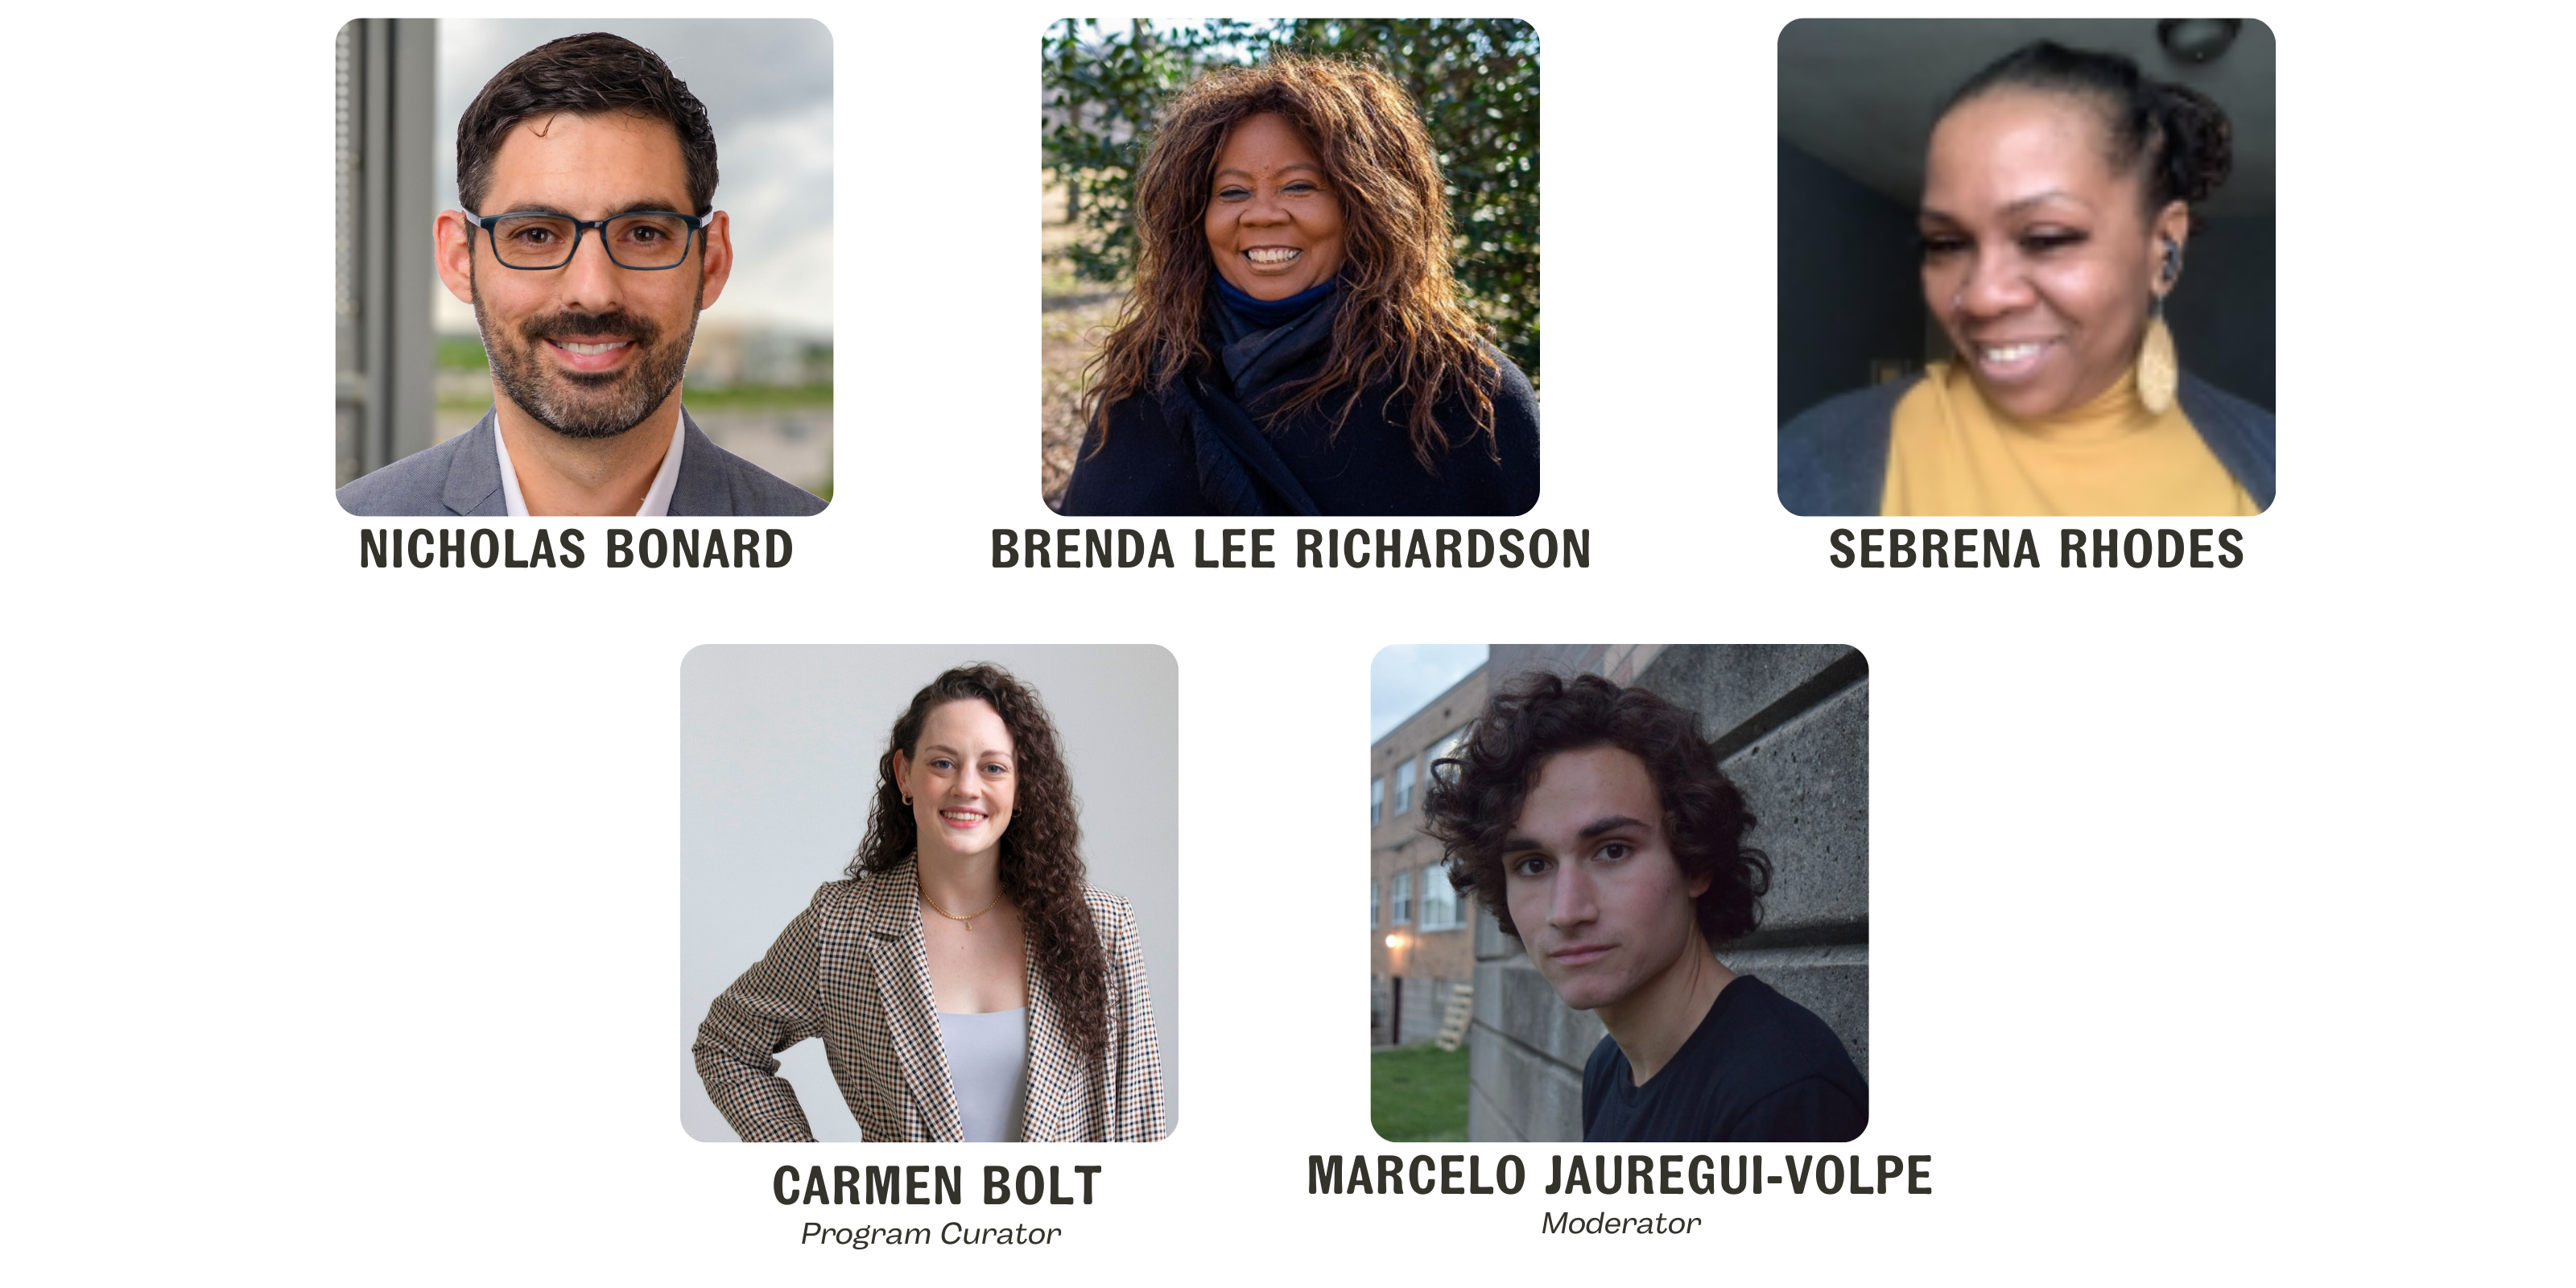 headshots of the 5 panelists: Nicholas Bonard, Brenda Lee Richardson, Sebrena Rhodes, Carmen Bolt (Program Curator), and Marcelo Jauregui-Volpe (Moderator)